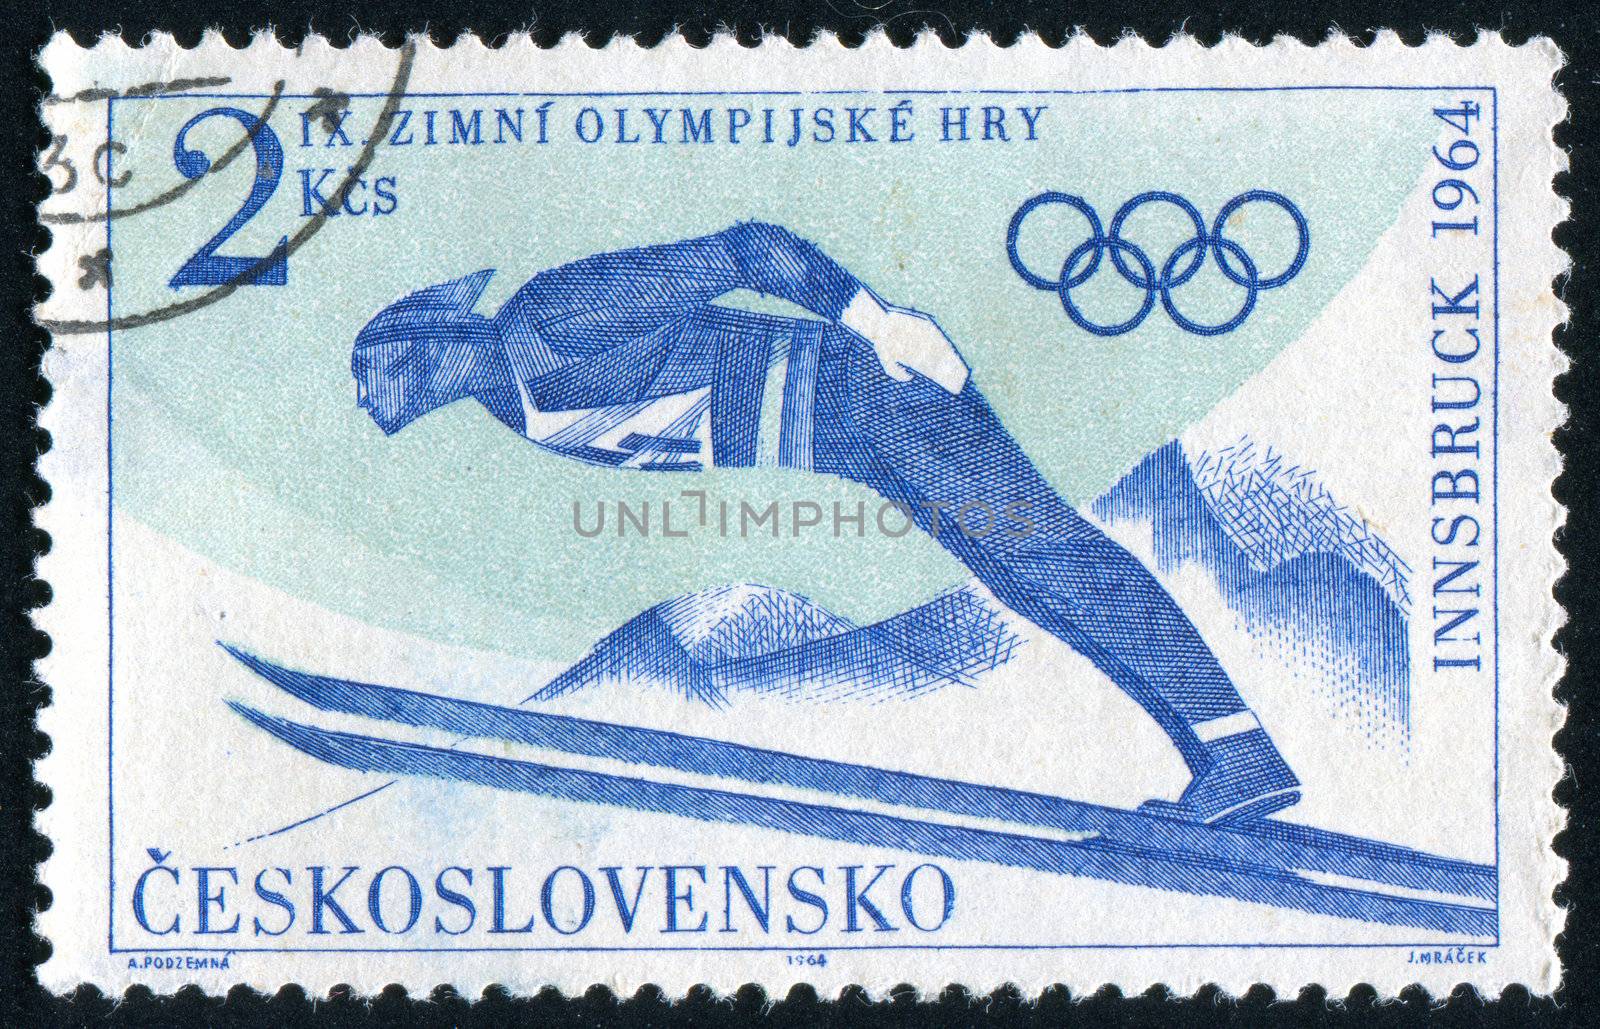 CZECHOSLOVAKIA - CIRCA 1964: stamp printed by Czechoslovakia, shows skier, circa 1964